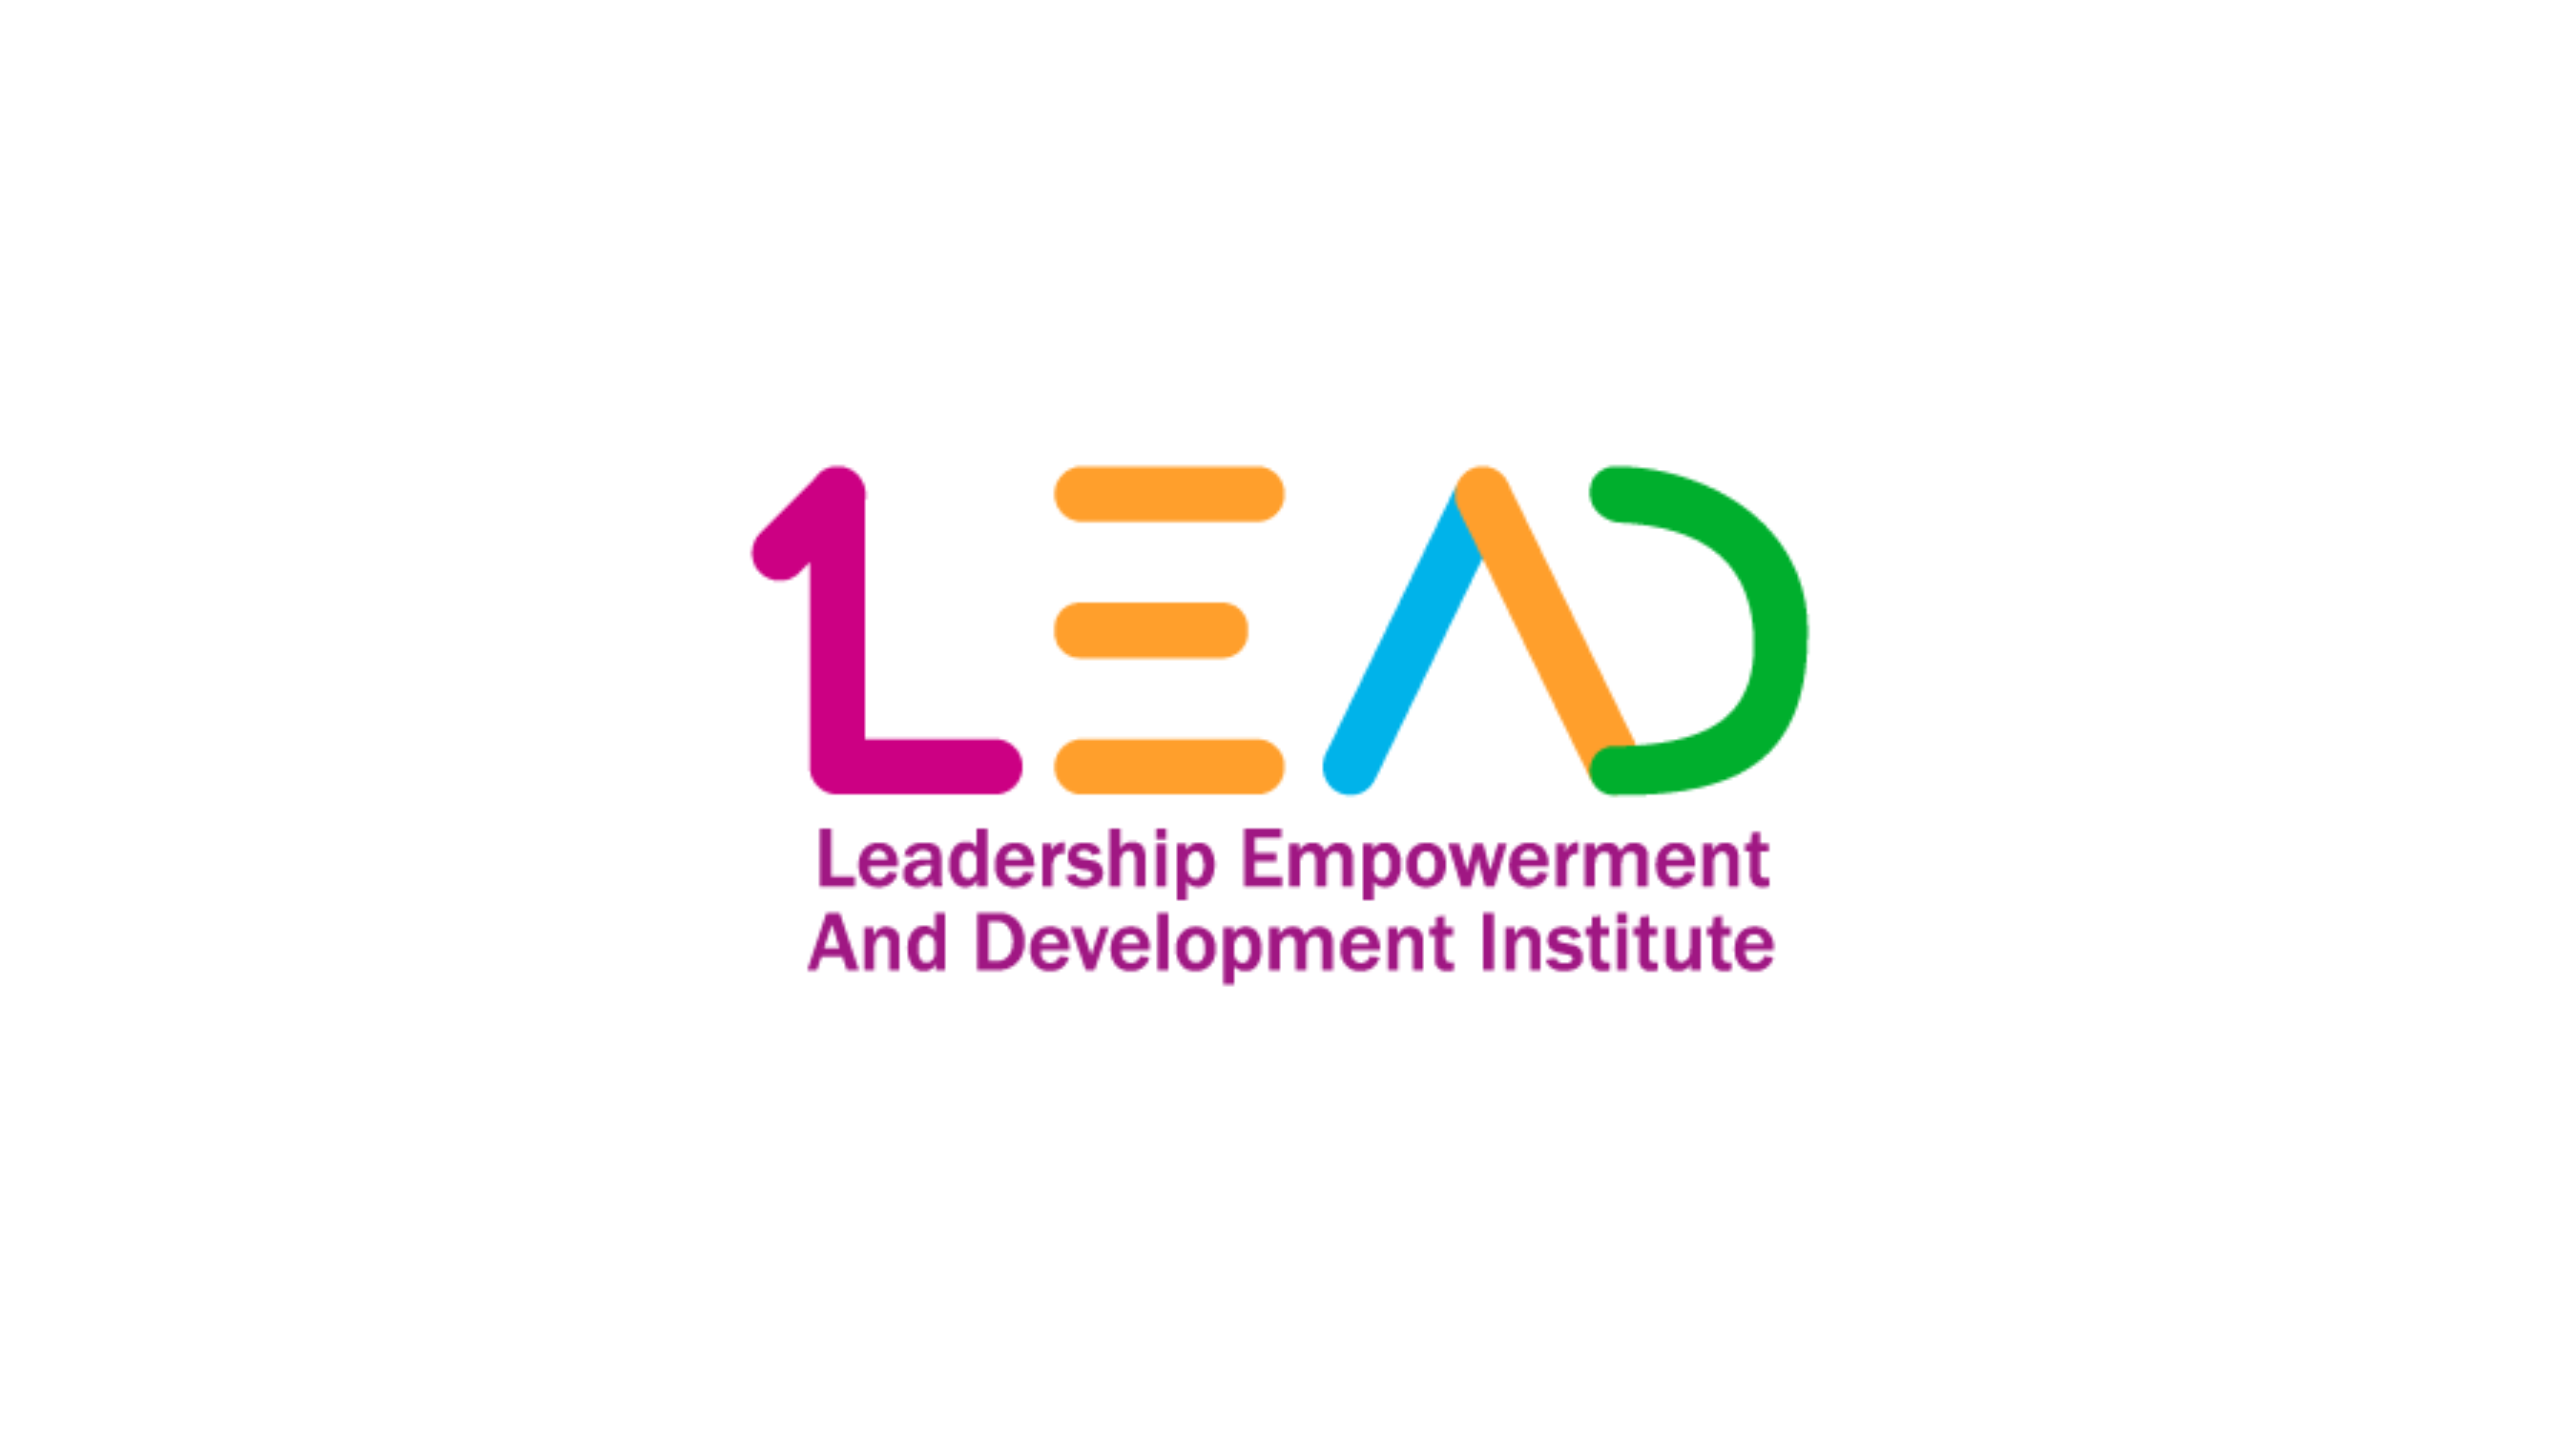 Leadership Empowerment And Development (LEAD) Institute